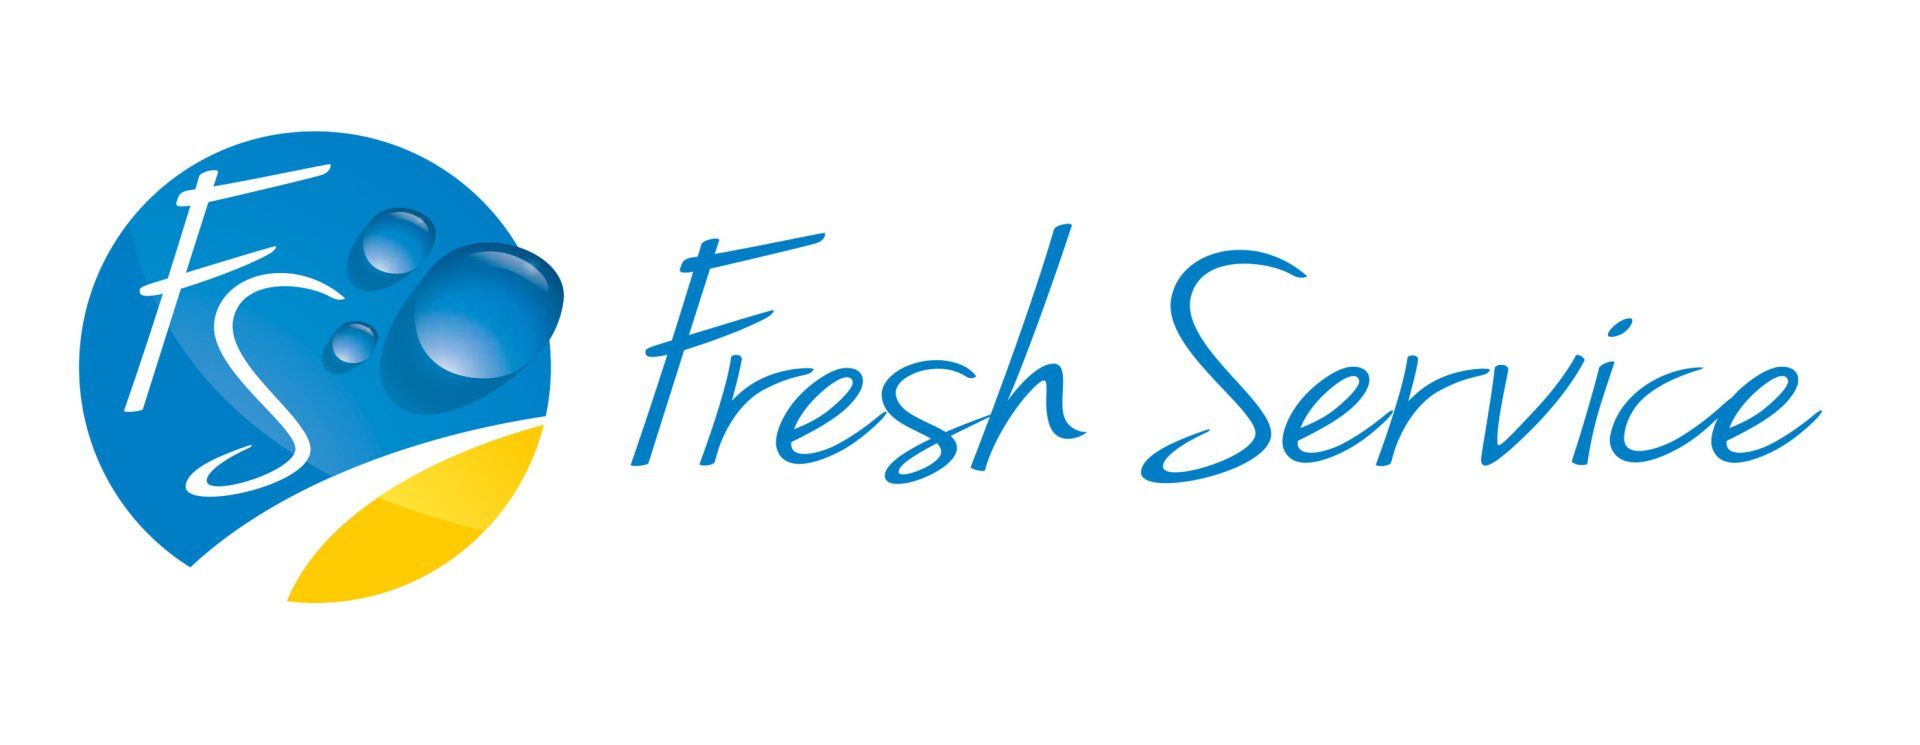 Fresh Service logo